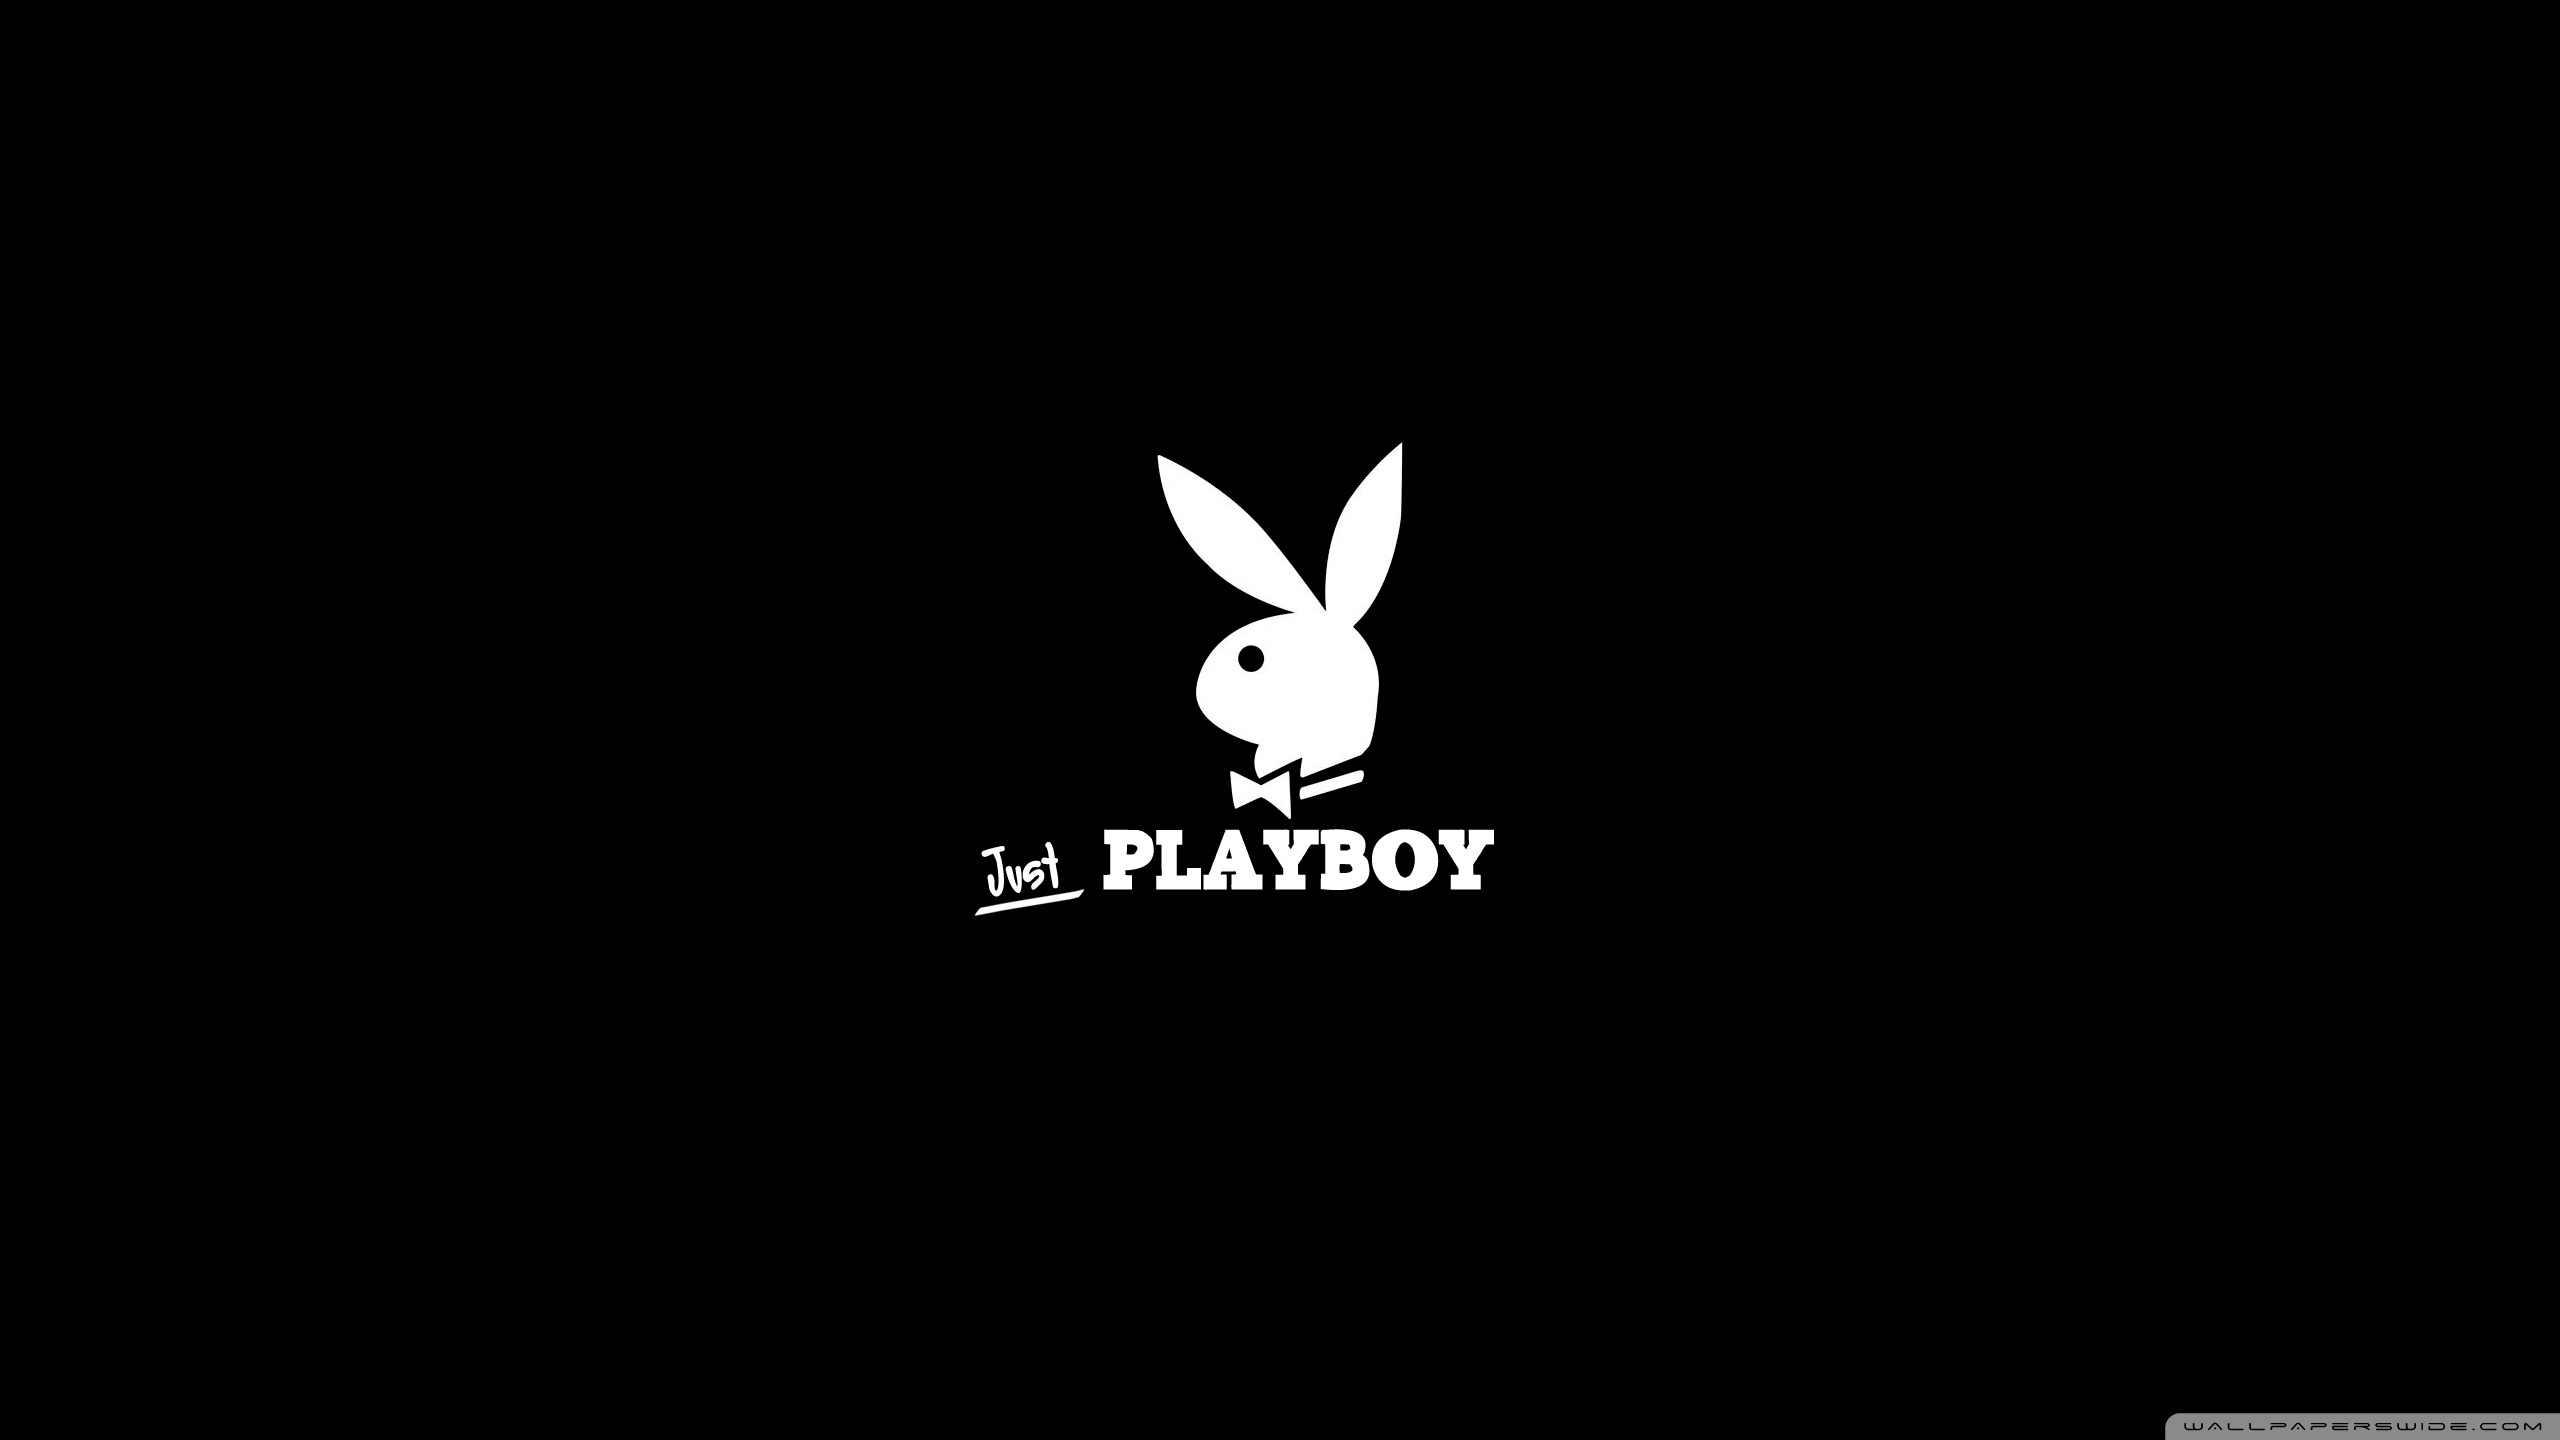 Playboy hd wallpaper